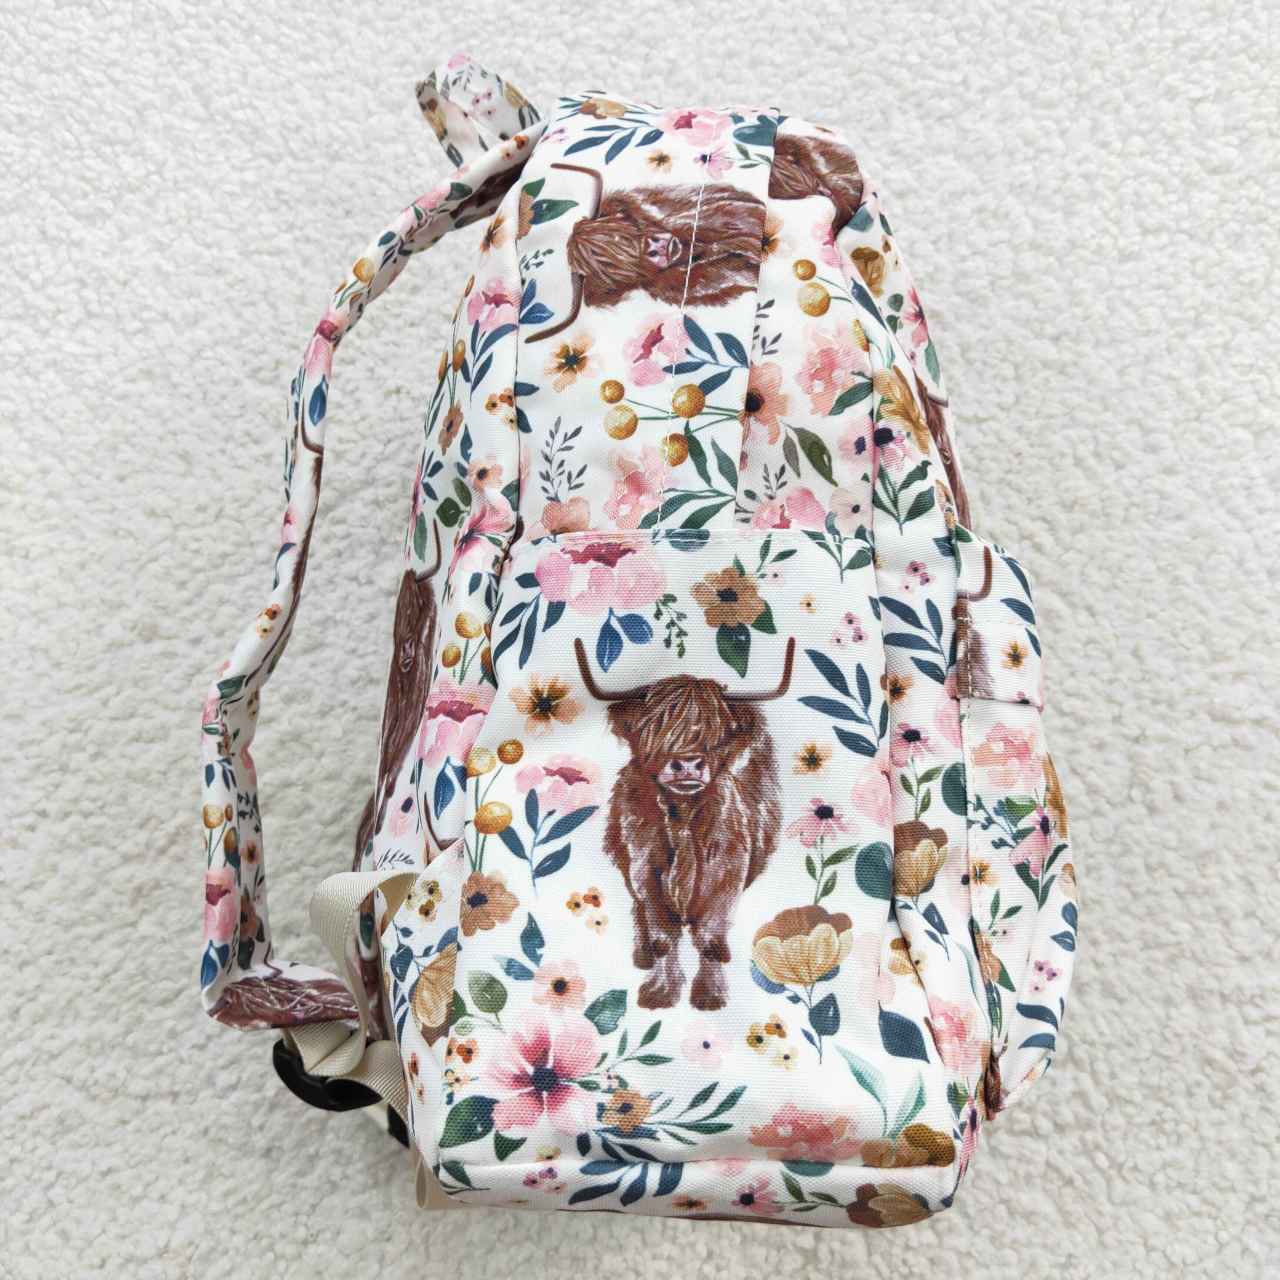 Highland cow print kids school backpack bag